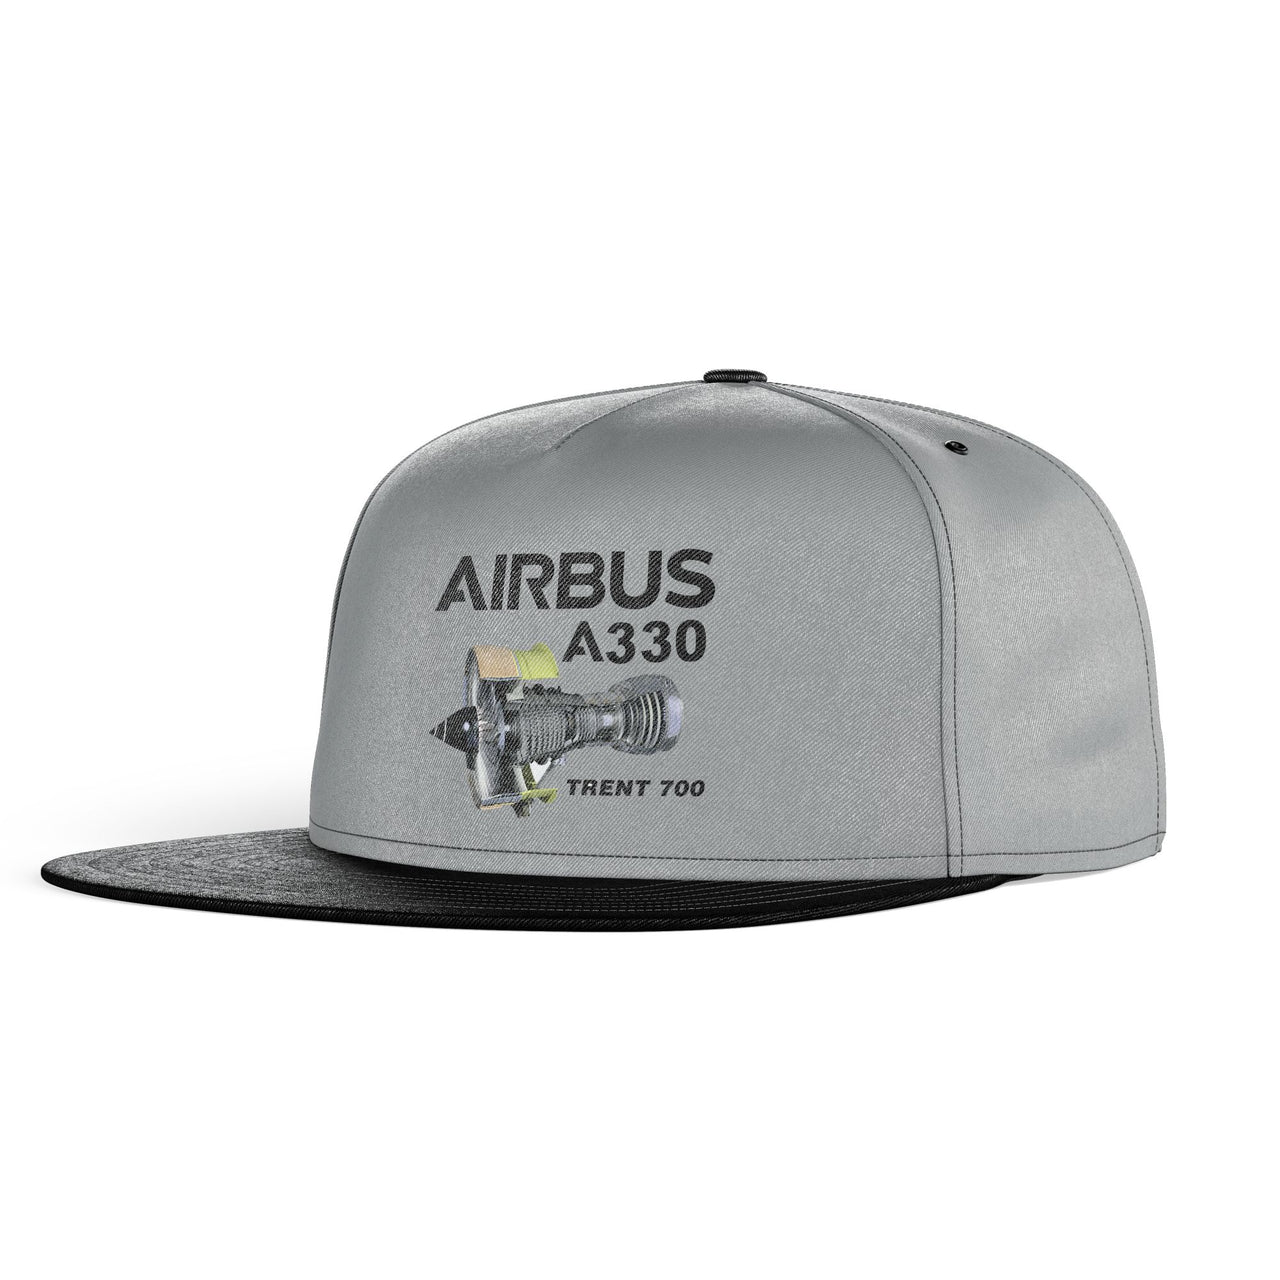 Airbus A330 & Trent 700 Engine Designed Snapback Caps & Hats